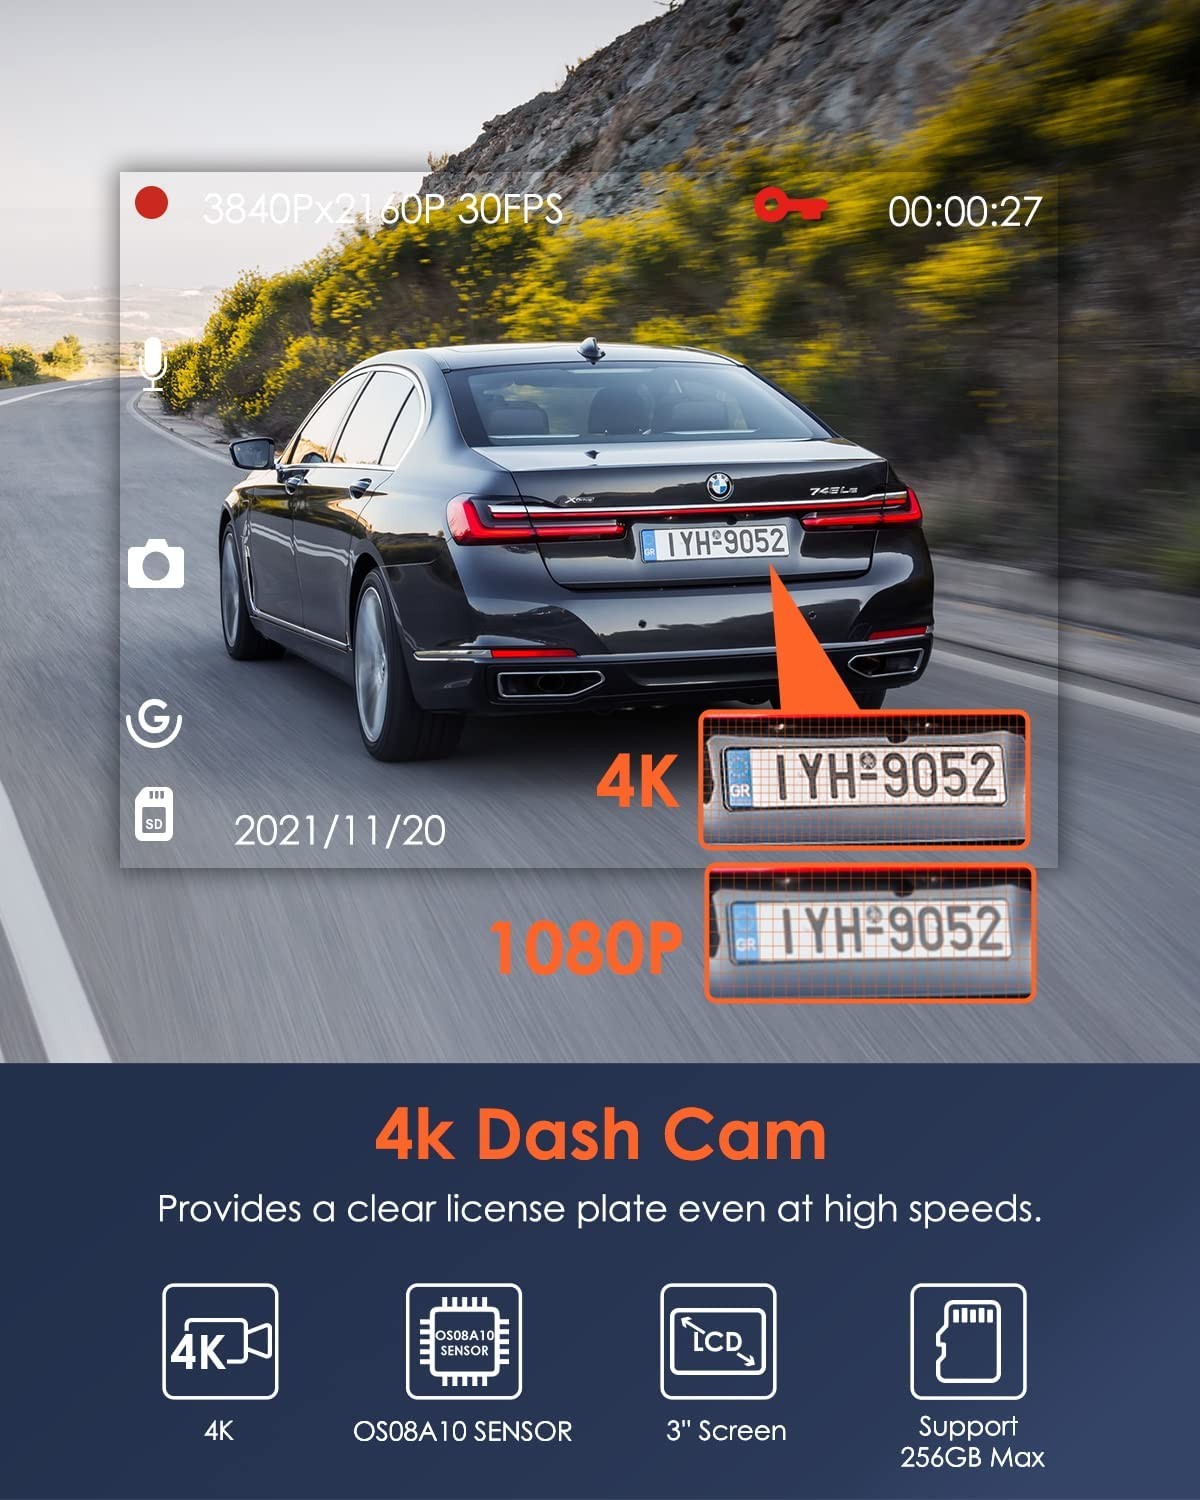 Vantrue X4s 4K WiFi Dash Cam, Parking Mode, Night Vision, G-Sensor